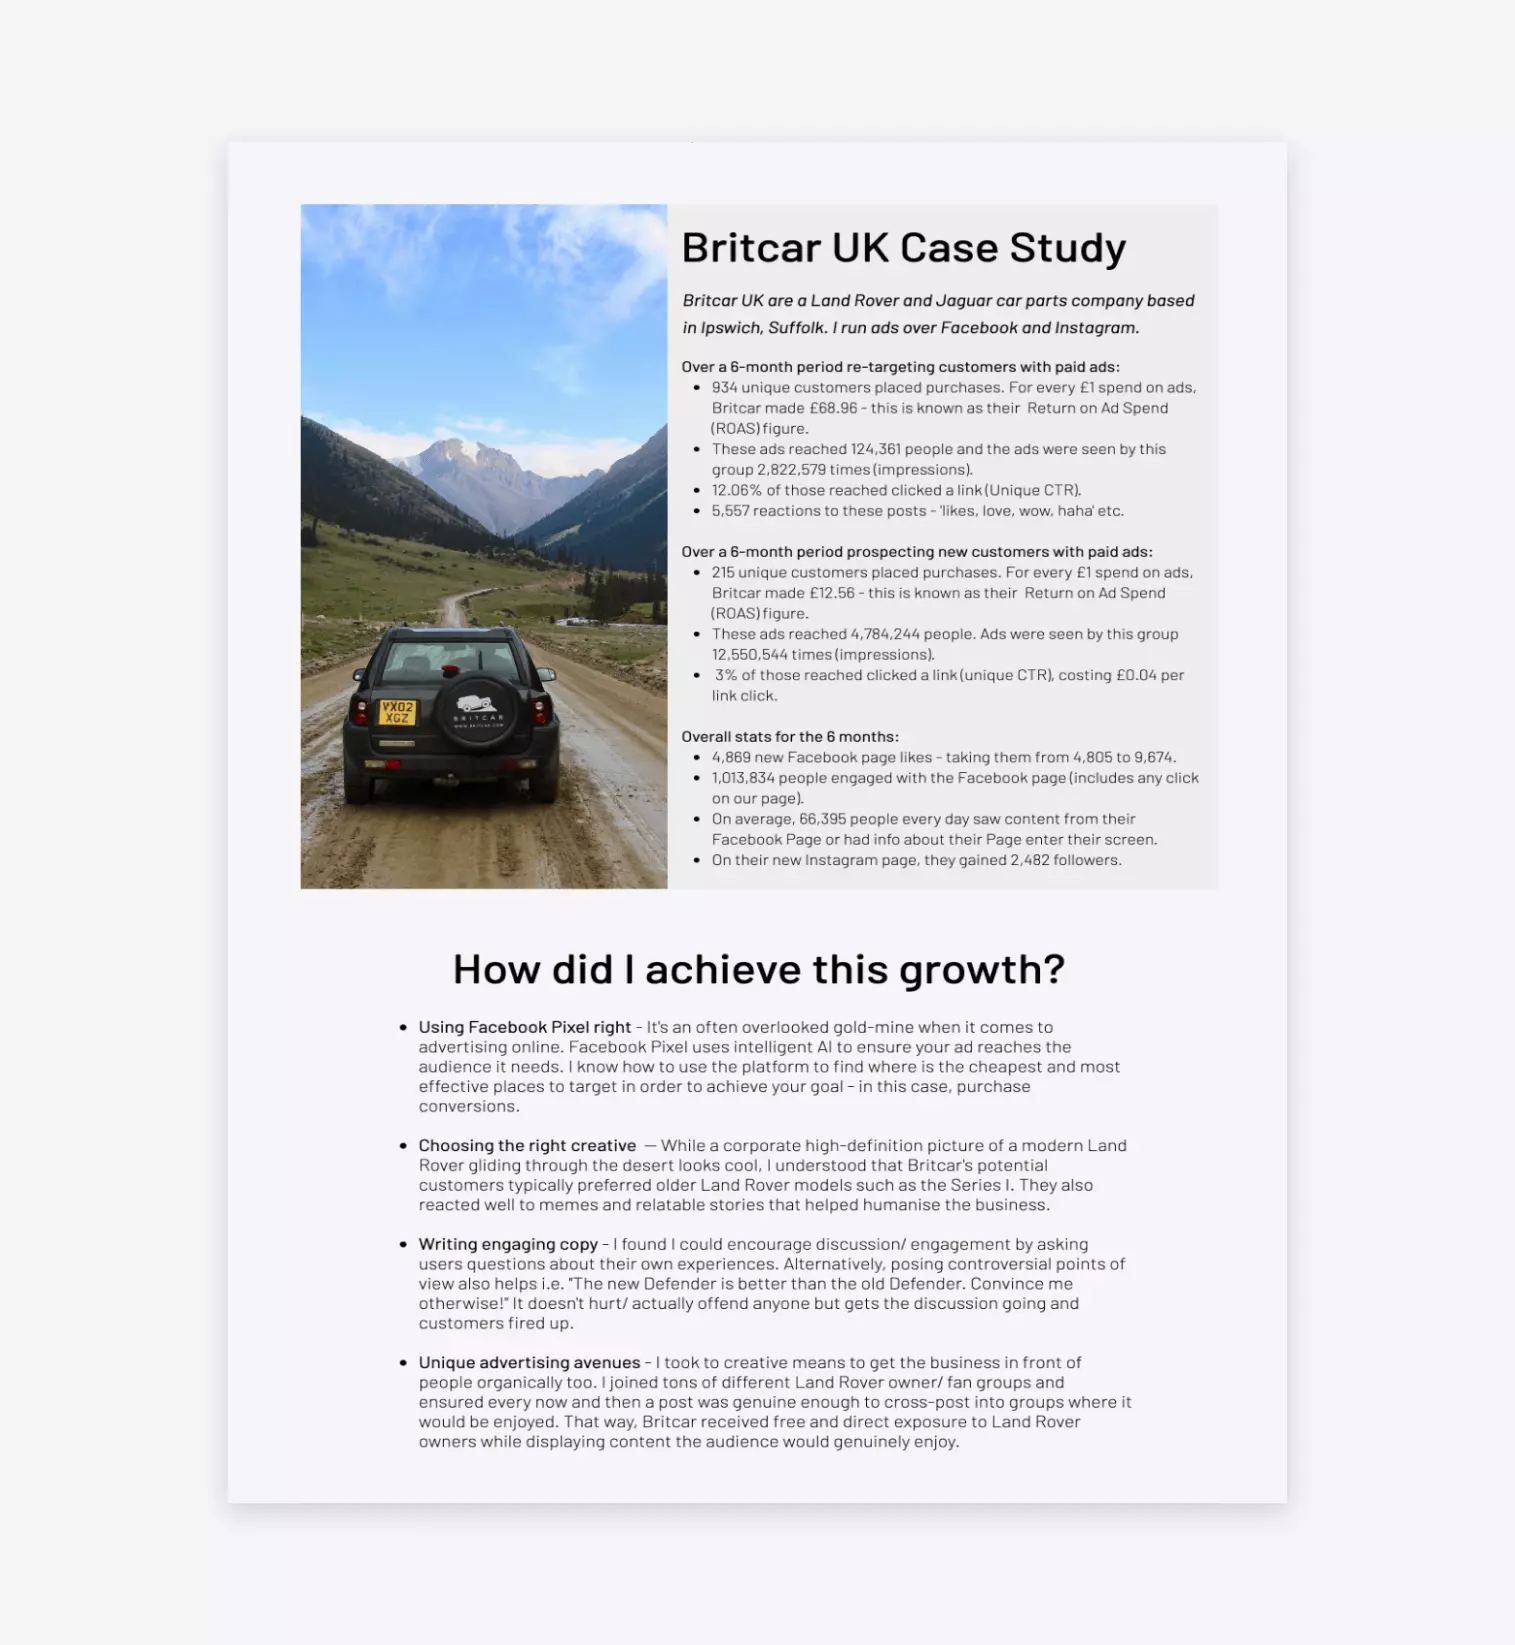 britcar UK social media case study presented on scarlett mansfield's website